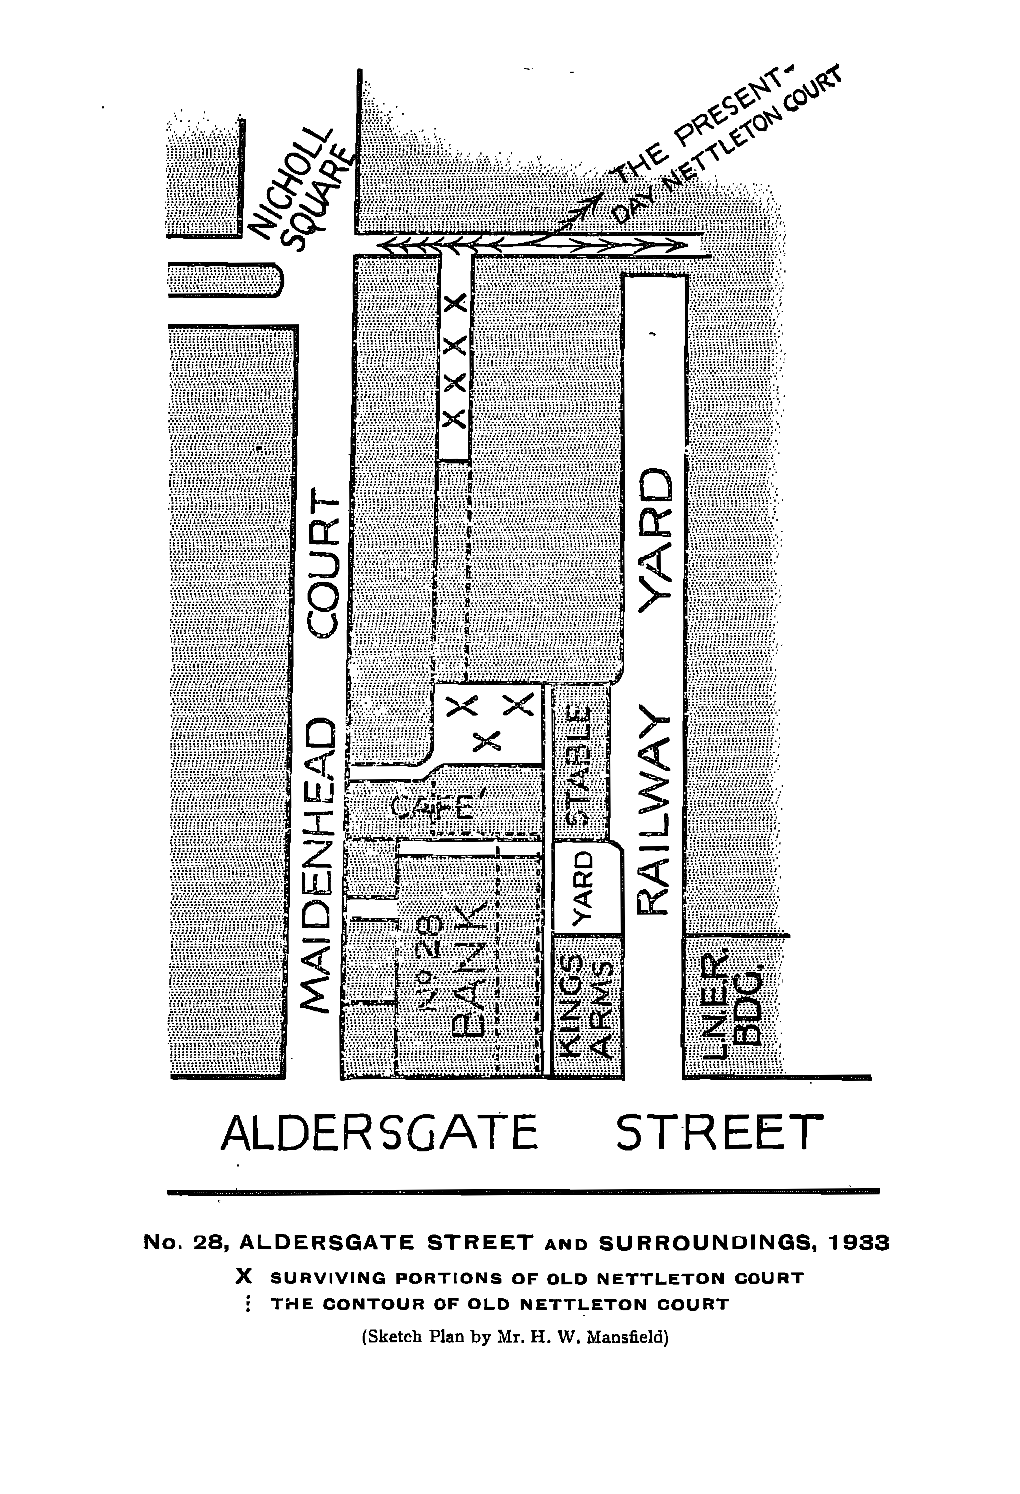 Aldersgate Street